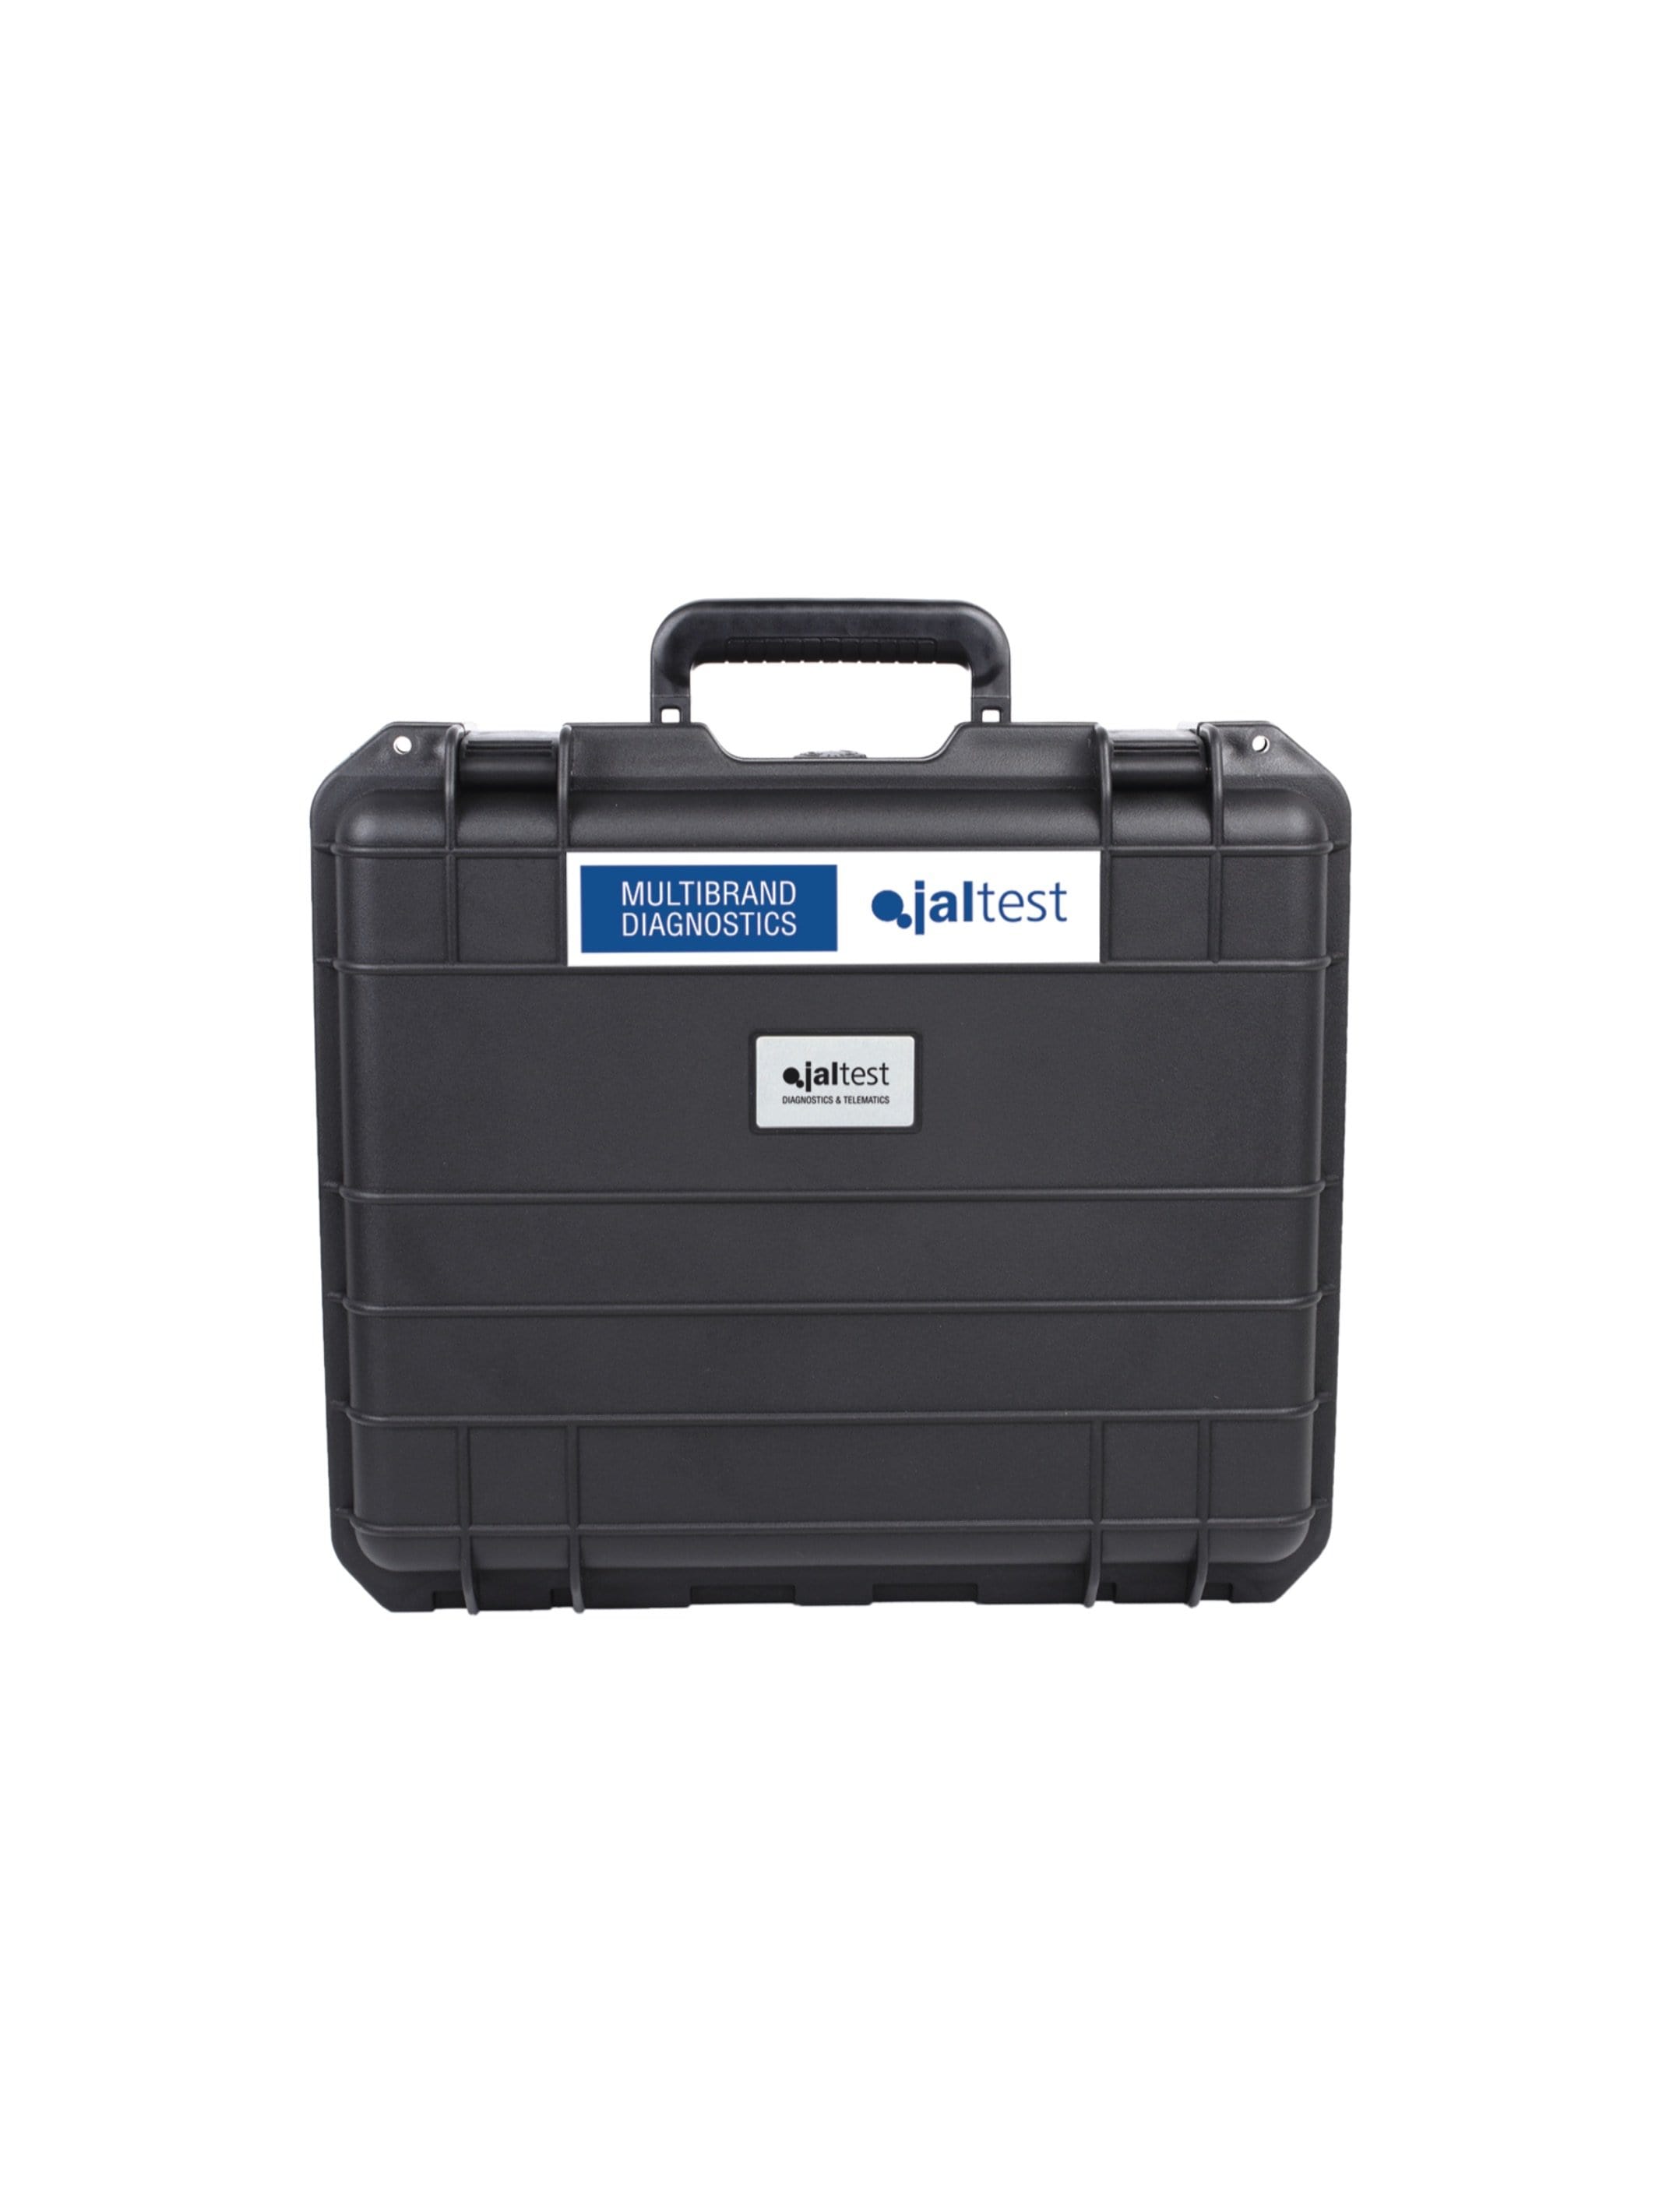 70003015 Transport Hardcase - Jaltest Deluxe Diagnostic Computer Kit for Commercial Vehicle, Construction & Agriculture Equipment